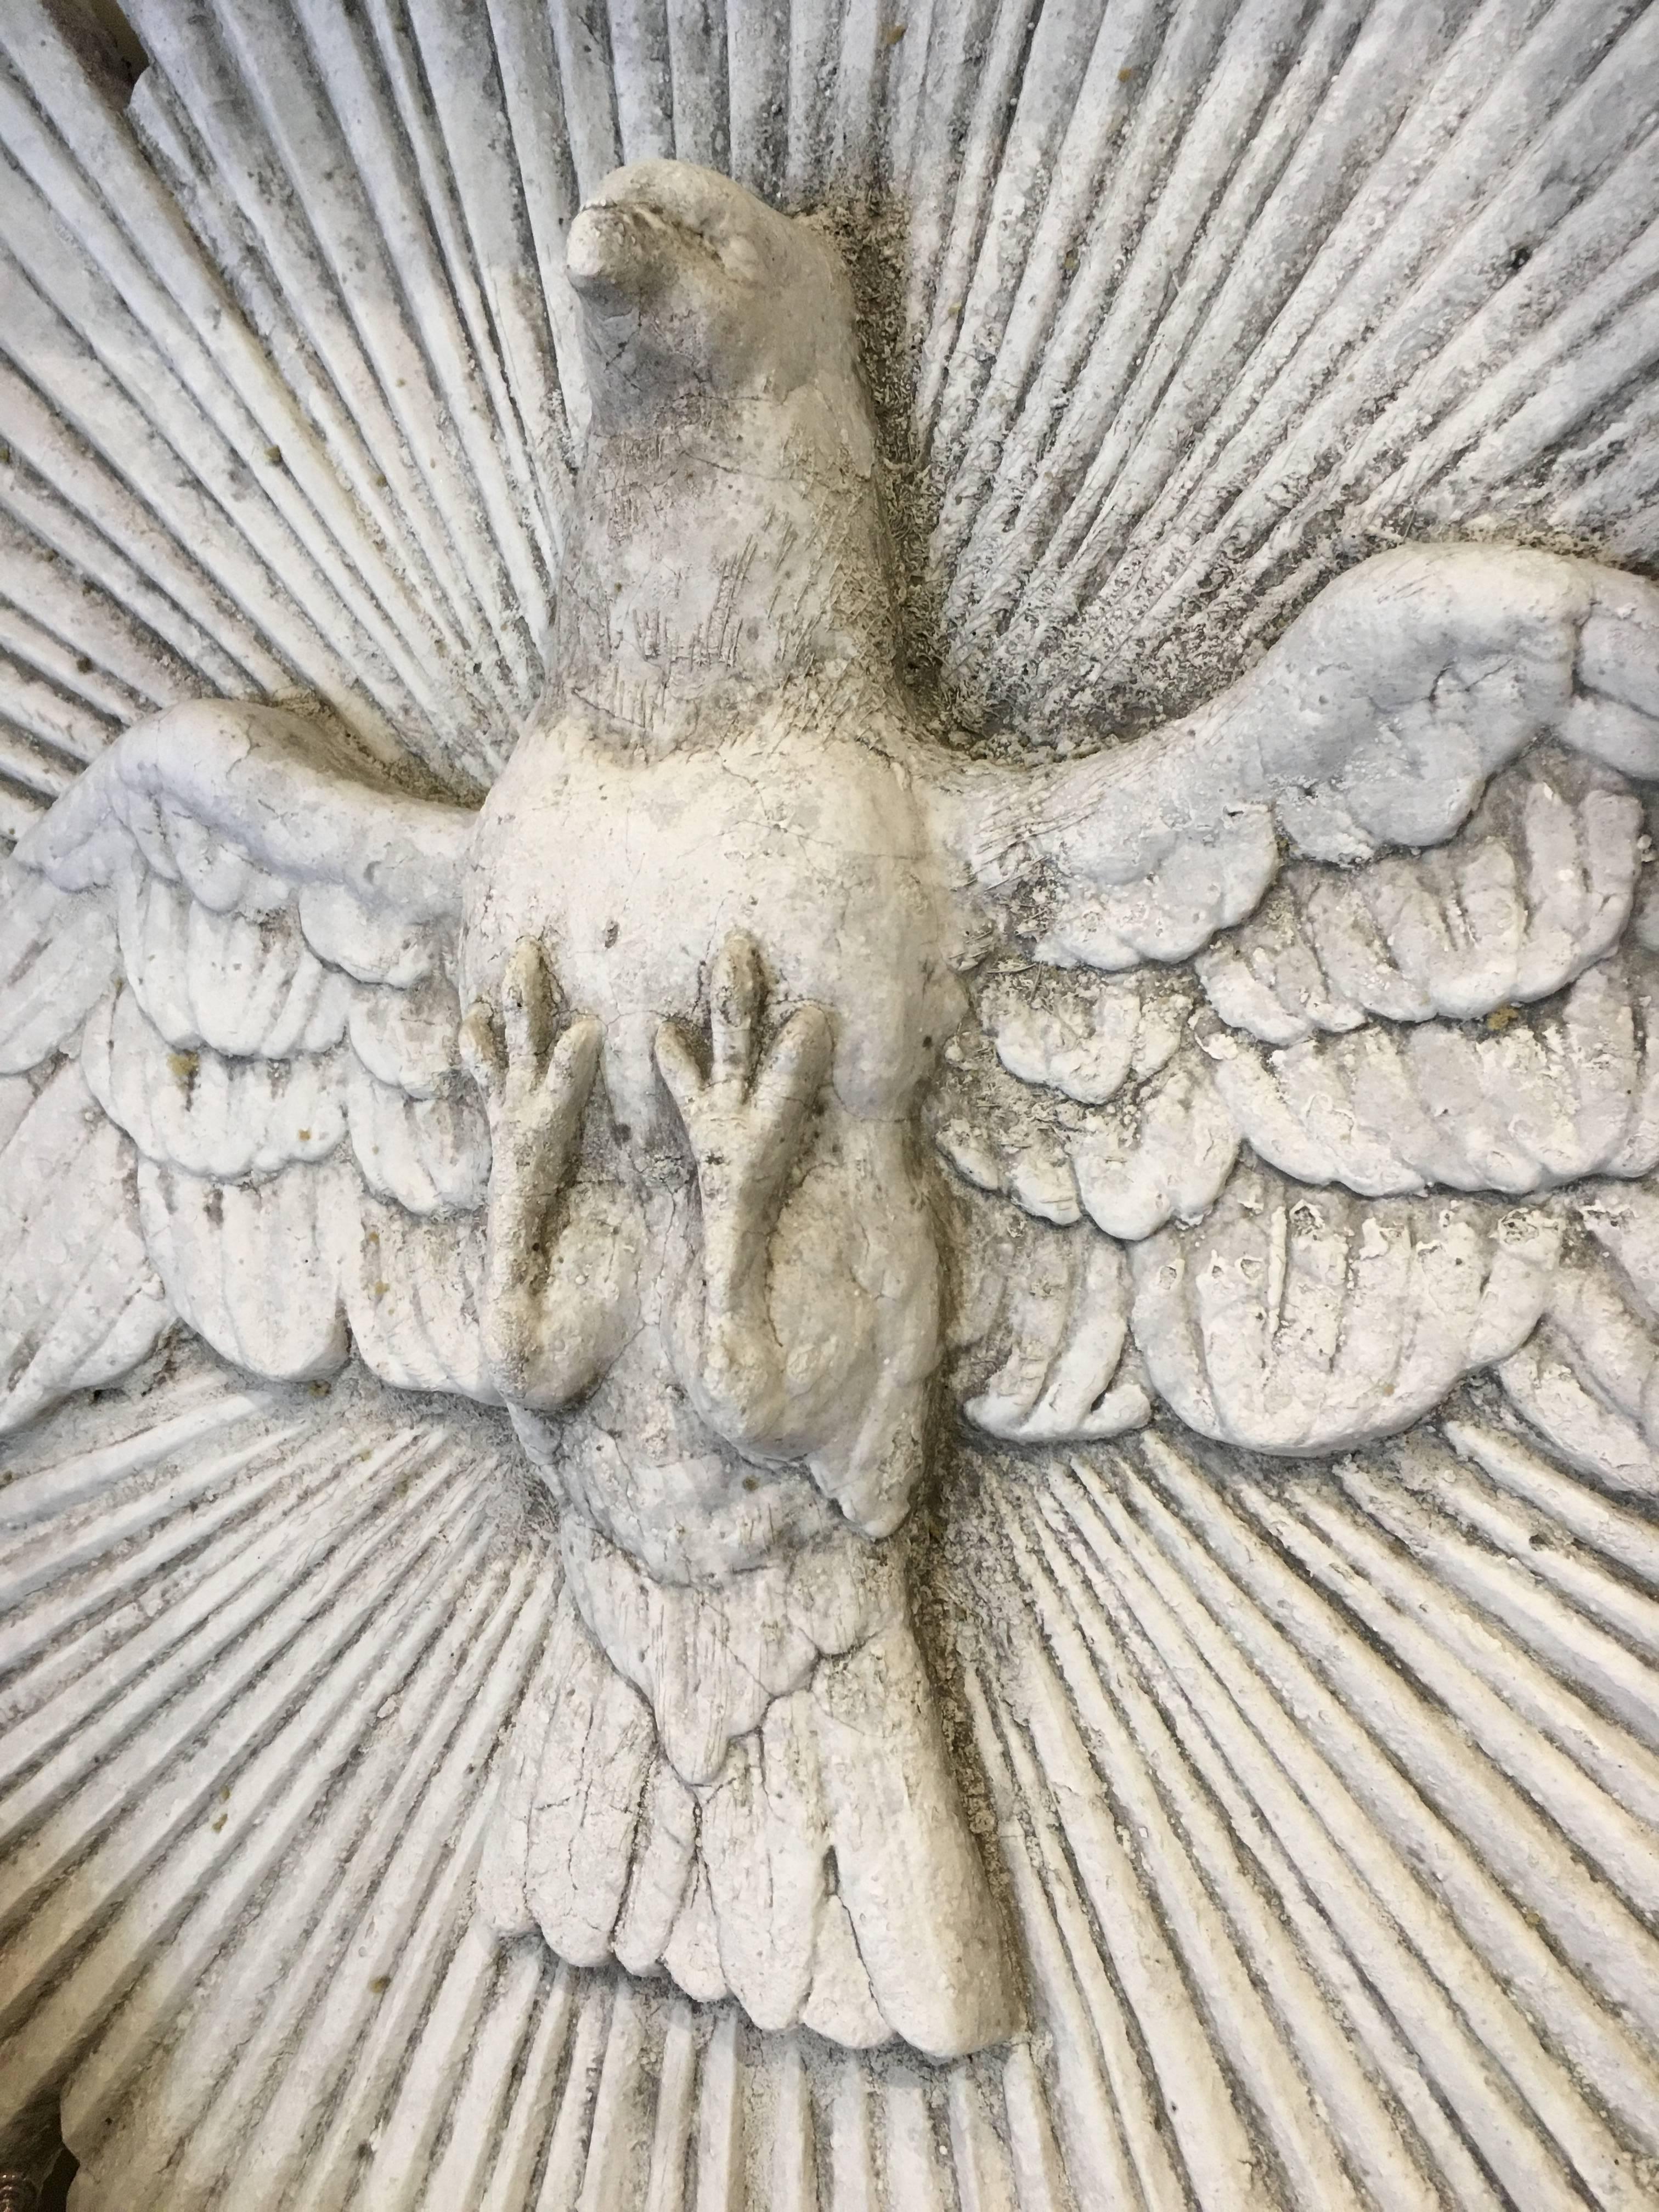 holy spirit dove